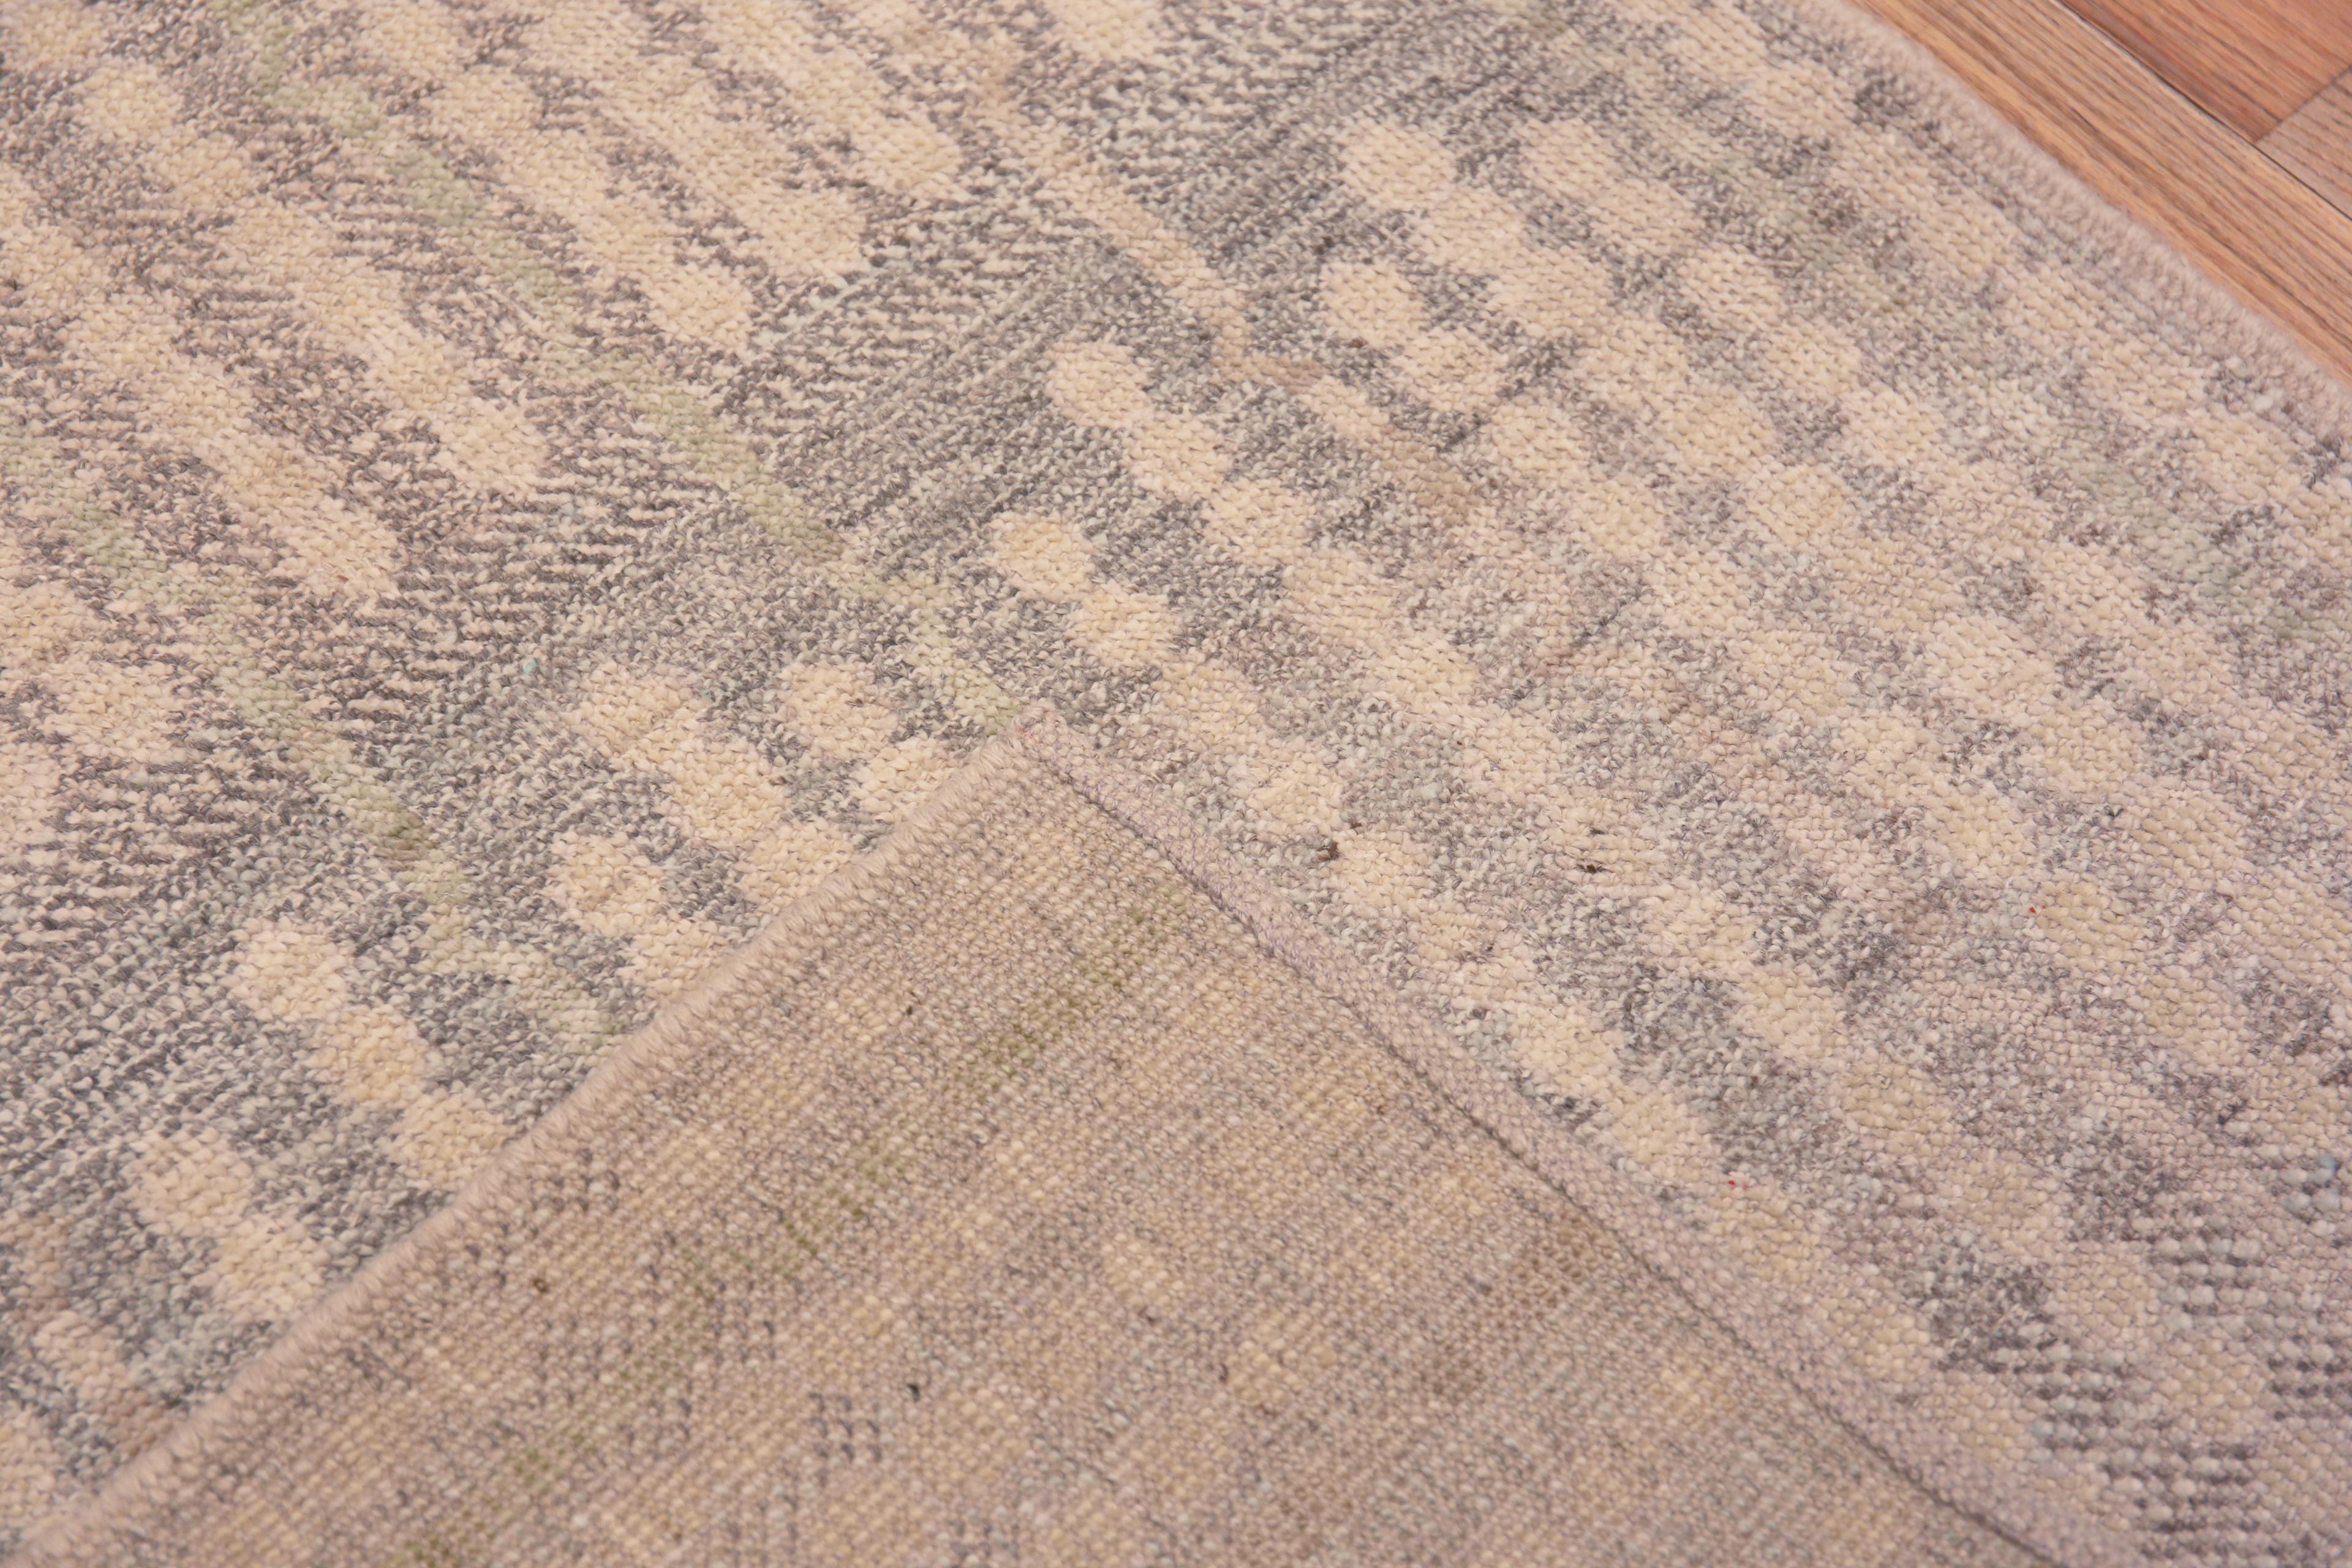 Wool Nazmiyal Collection Tribal Geometric Design Modern Hallway Runner Rug 3' x 13' For Sale